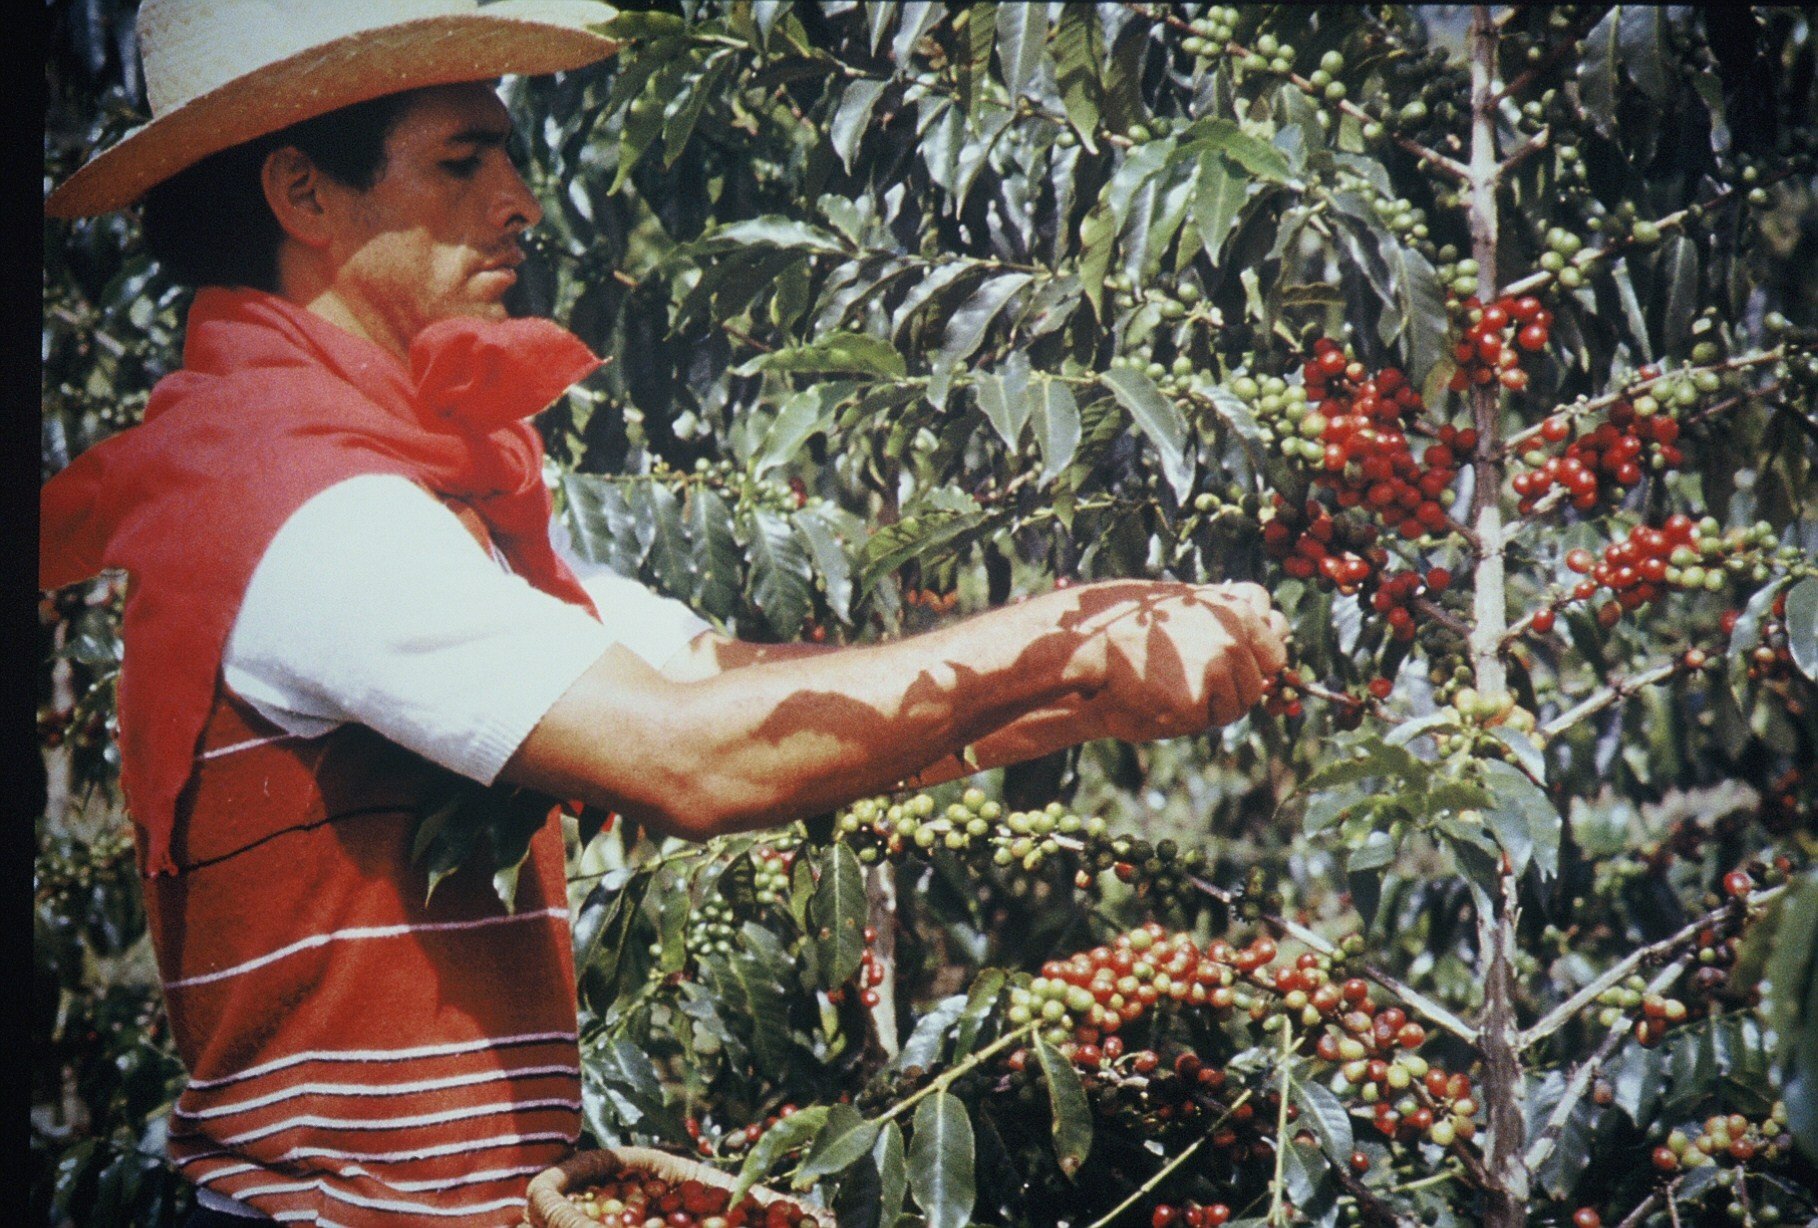 blog 3 farmer picking coffee beans.jpg